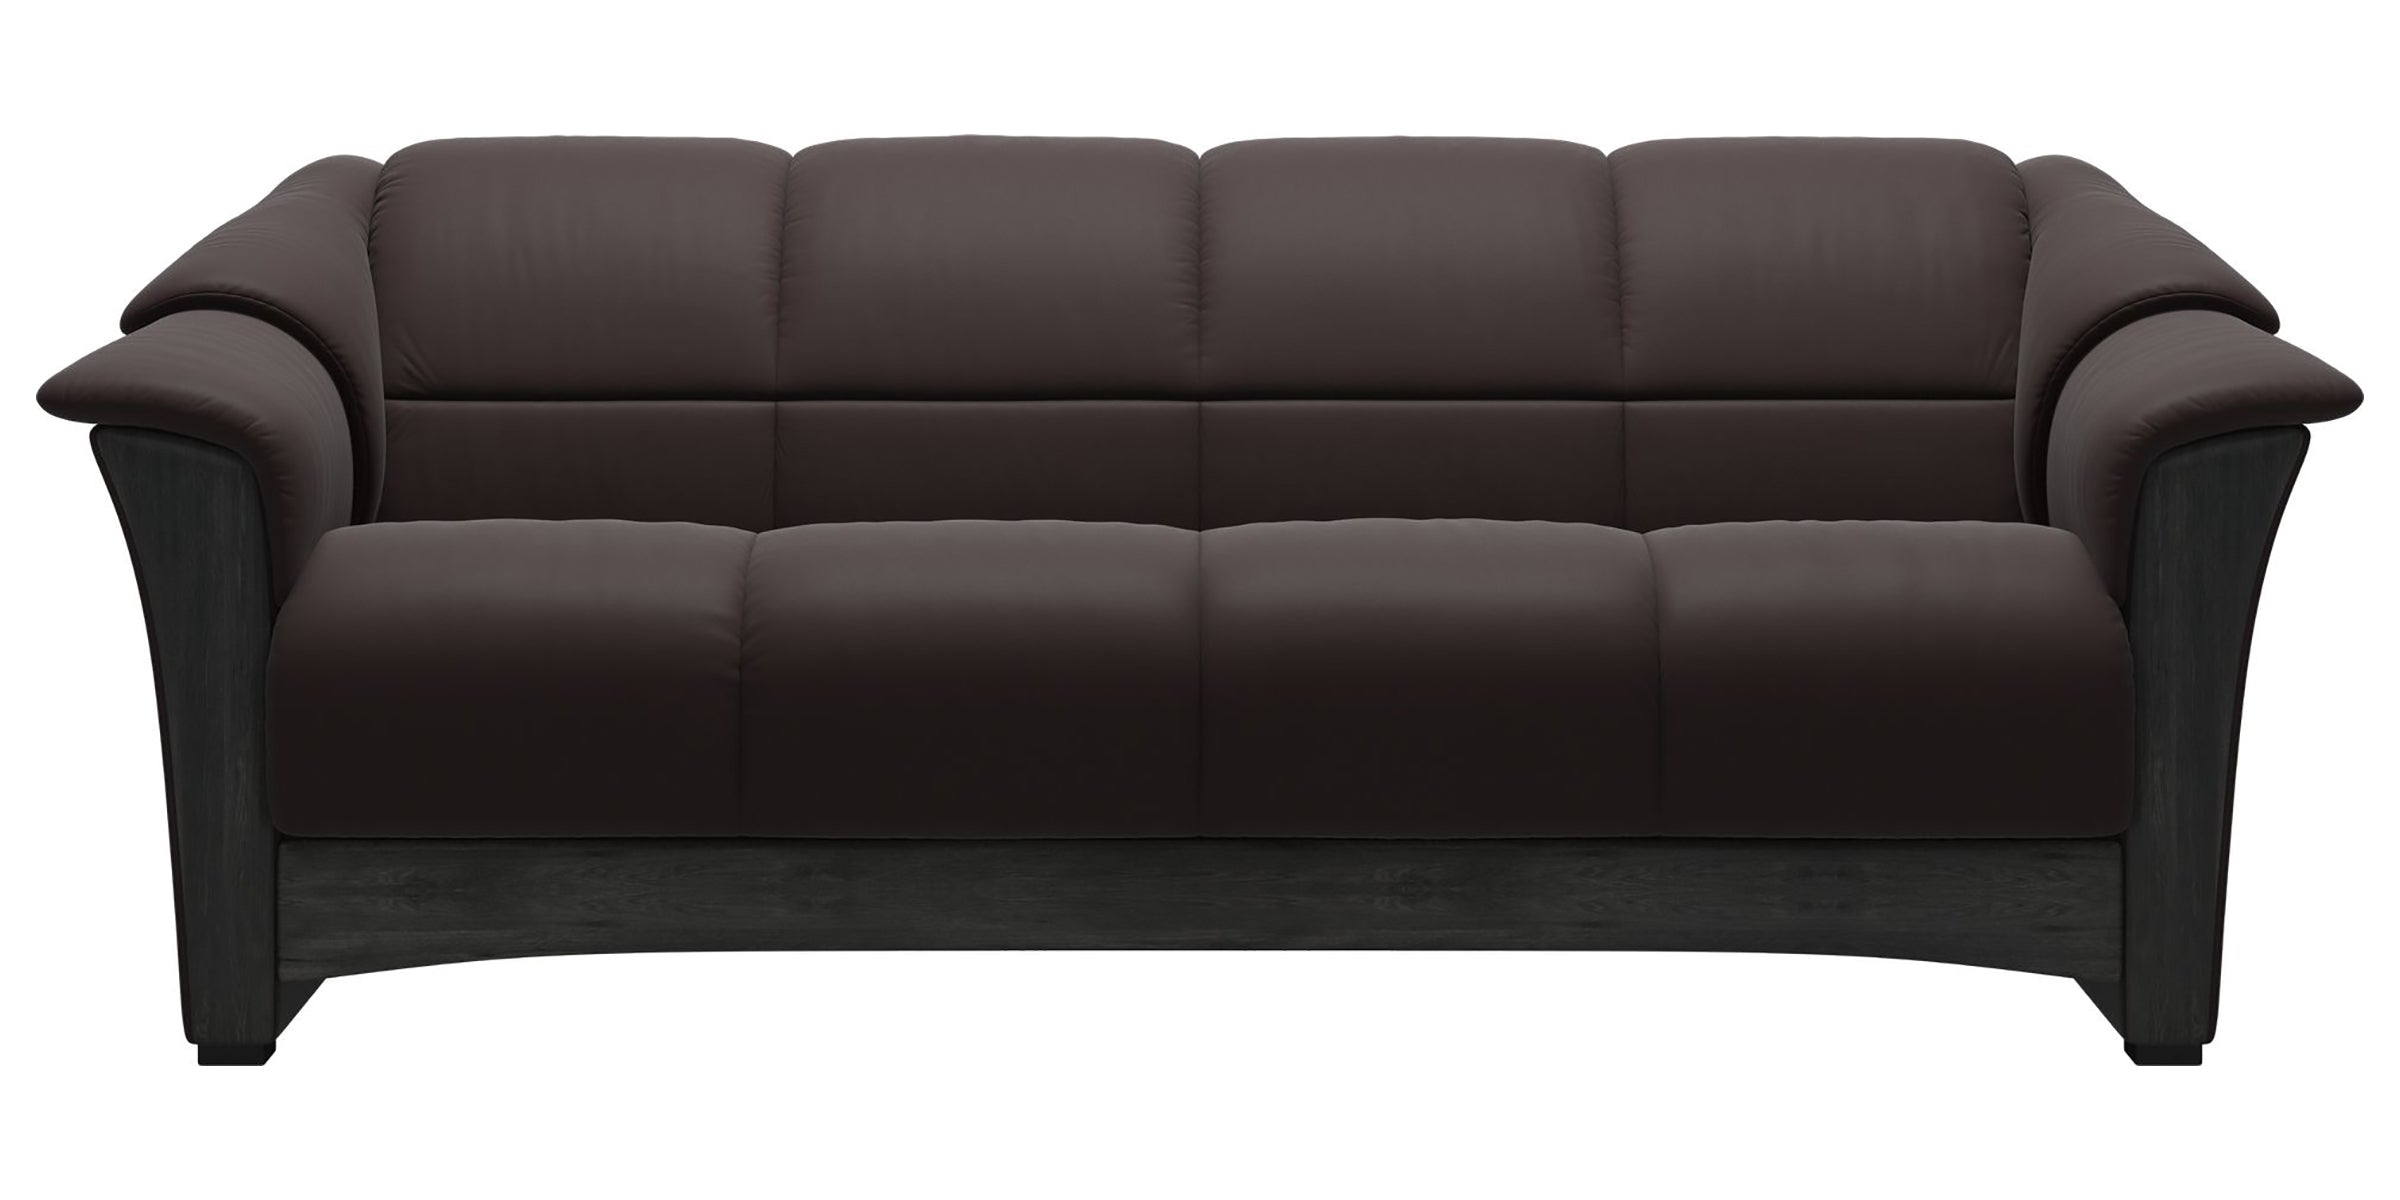 Paloma Leather Chocolate and Grey Base | Stressless Oslo Sofa | Valley Ridge Furniture